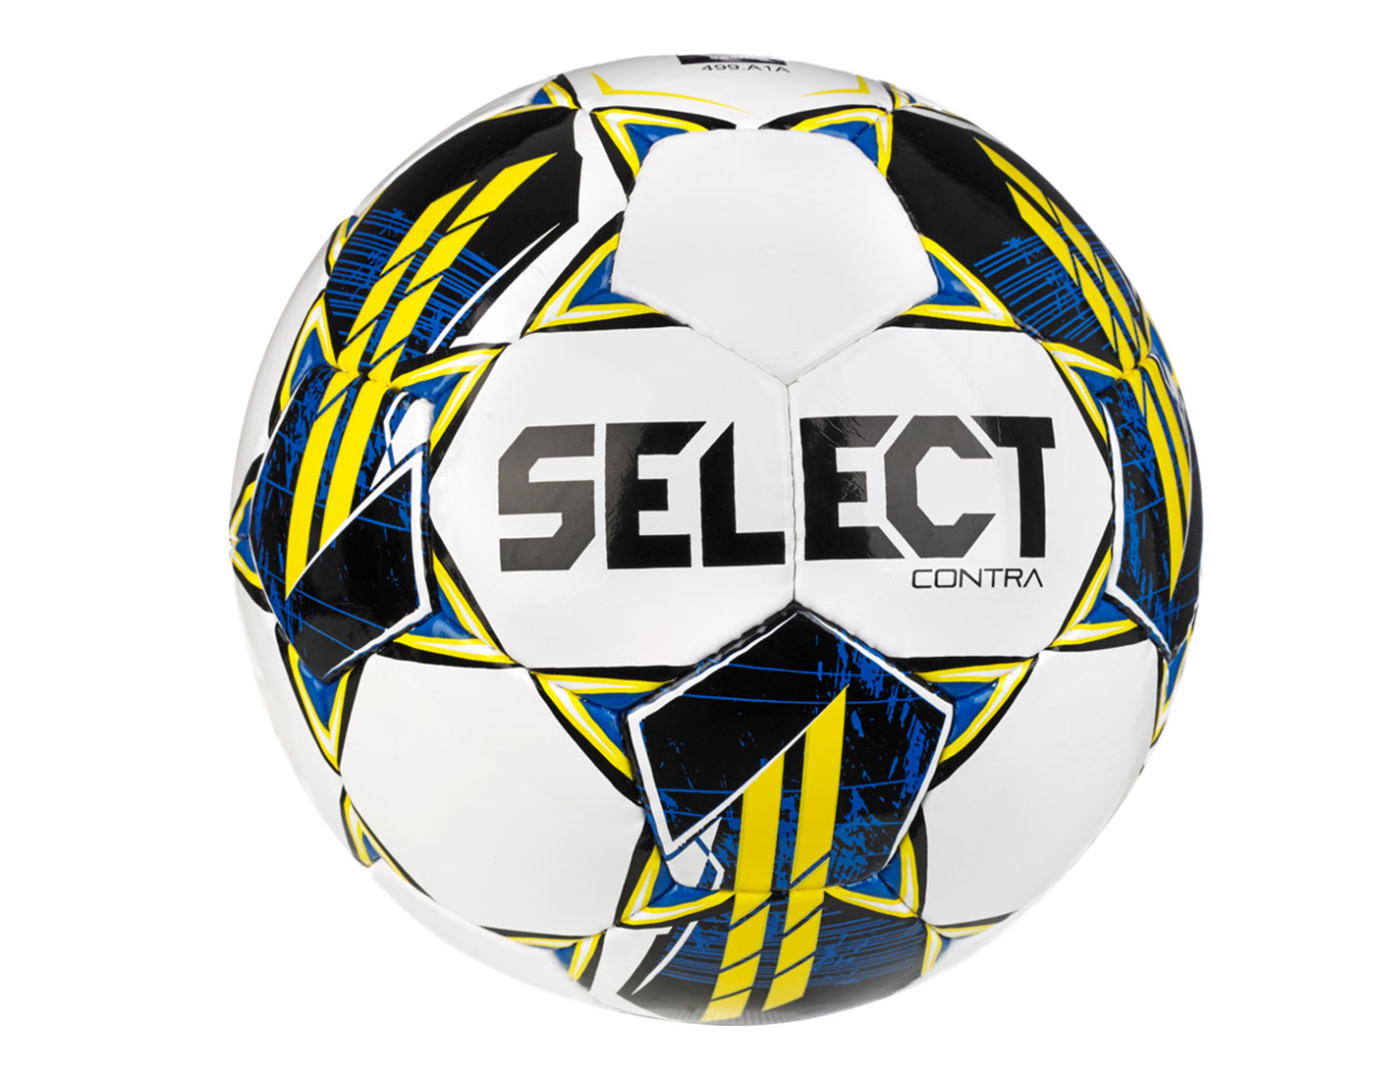 Fotbalový míč Select FB Contra bílo/žlutá vel.5